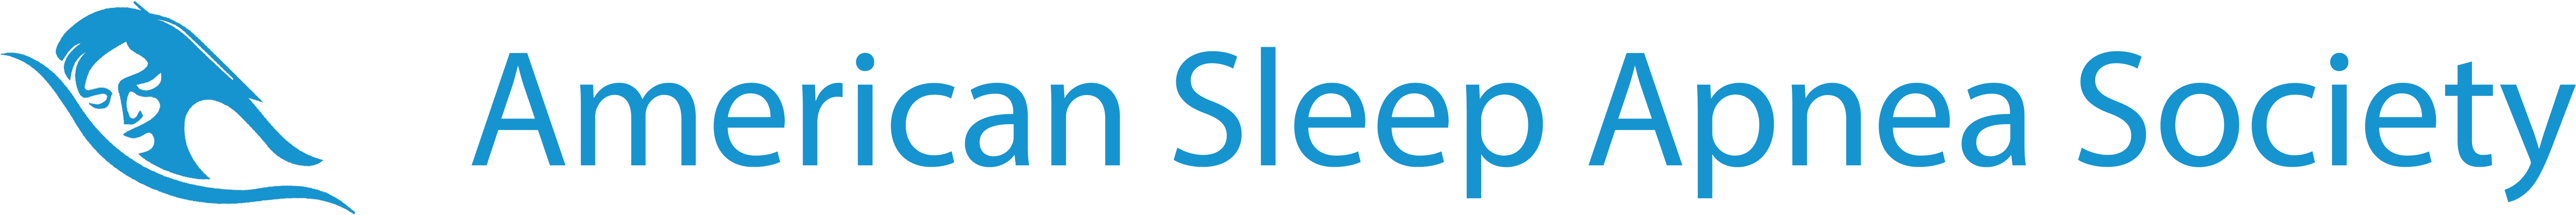 American Sleep Apnea Society